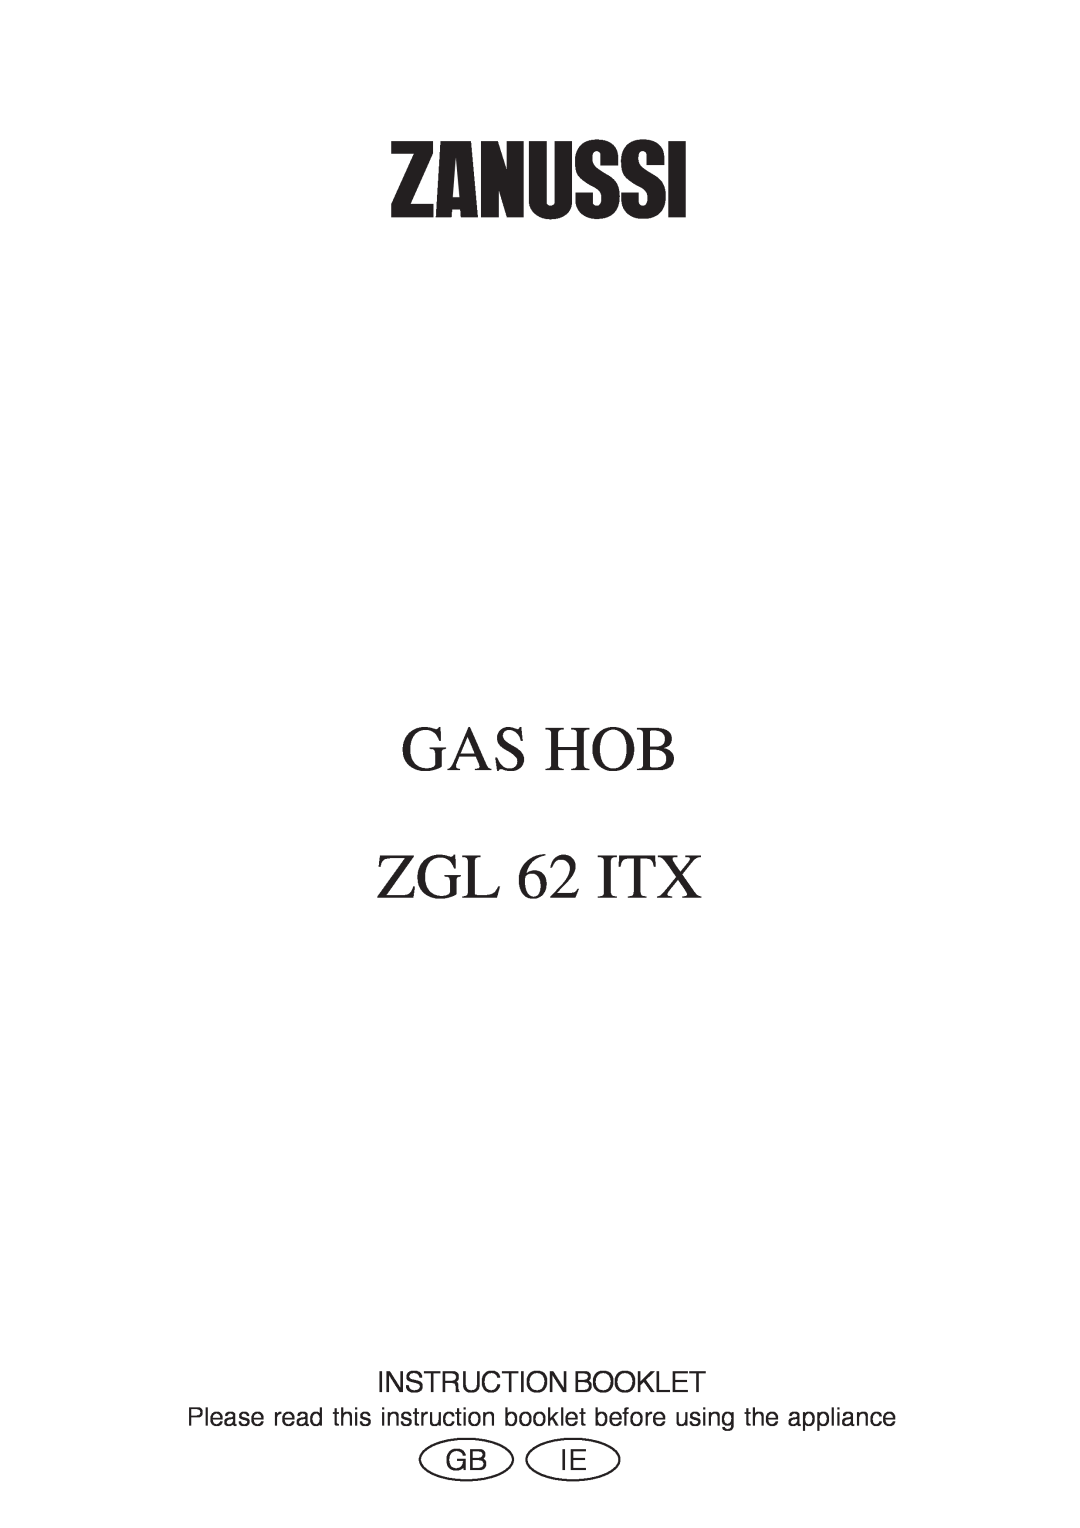 Zanussi manual GAS HOB ZGL 62 ITX, Instruction Booklet, Gb Ie 